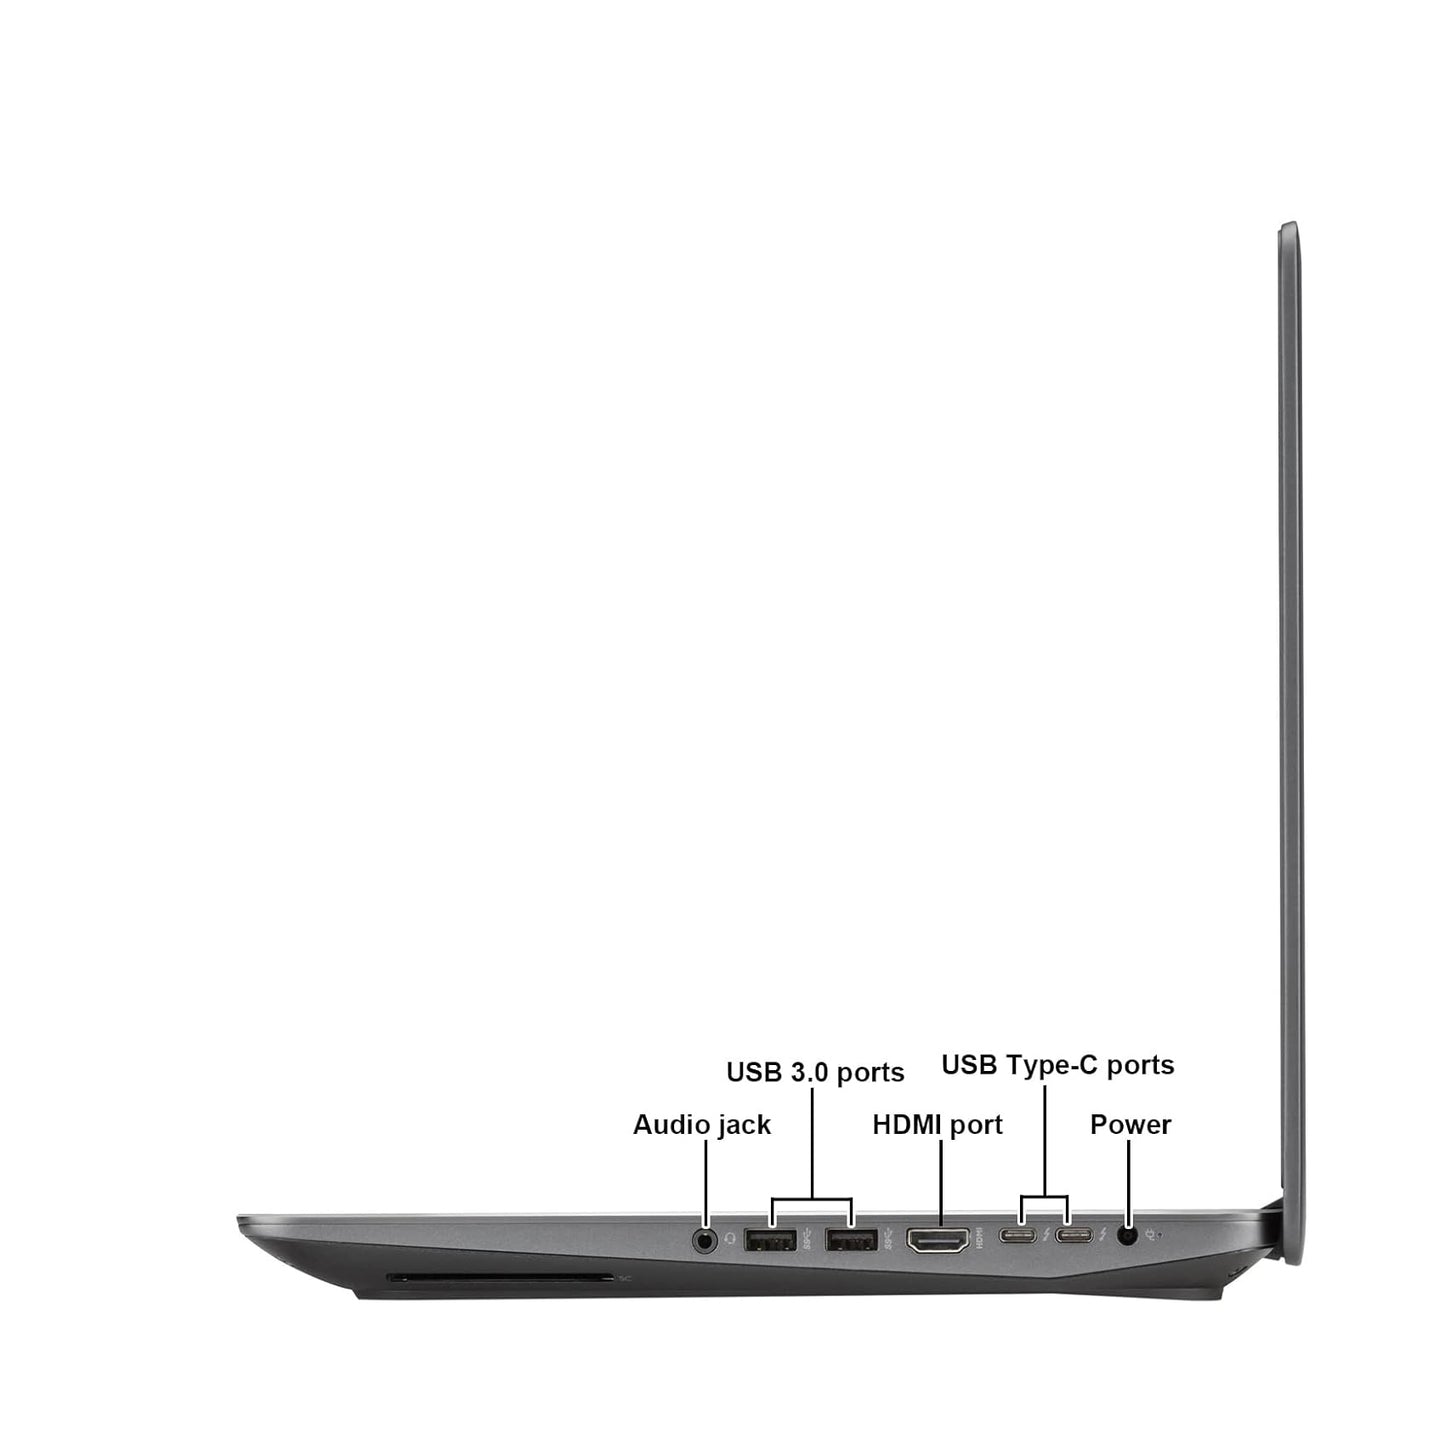 Hp Zbook Intel Core HQ-Series Fhd Truecolor Laptop Offers (Open Box)